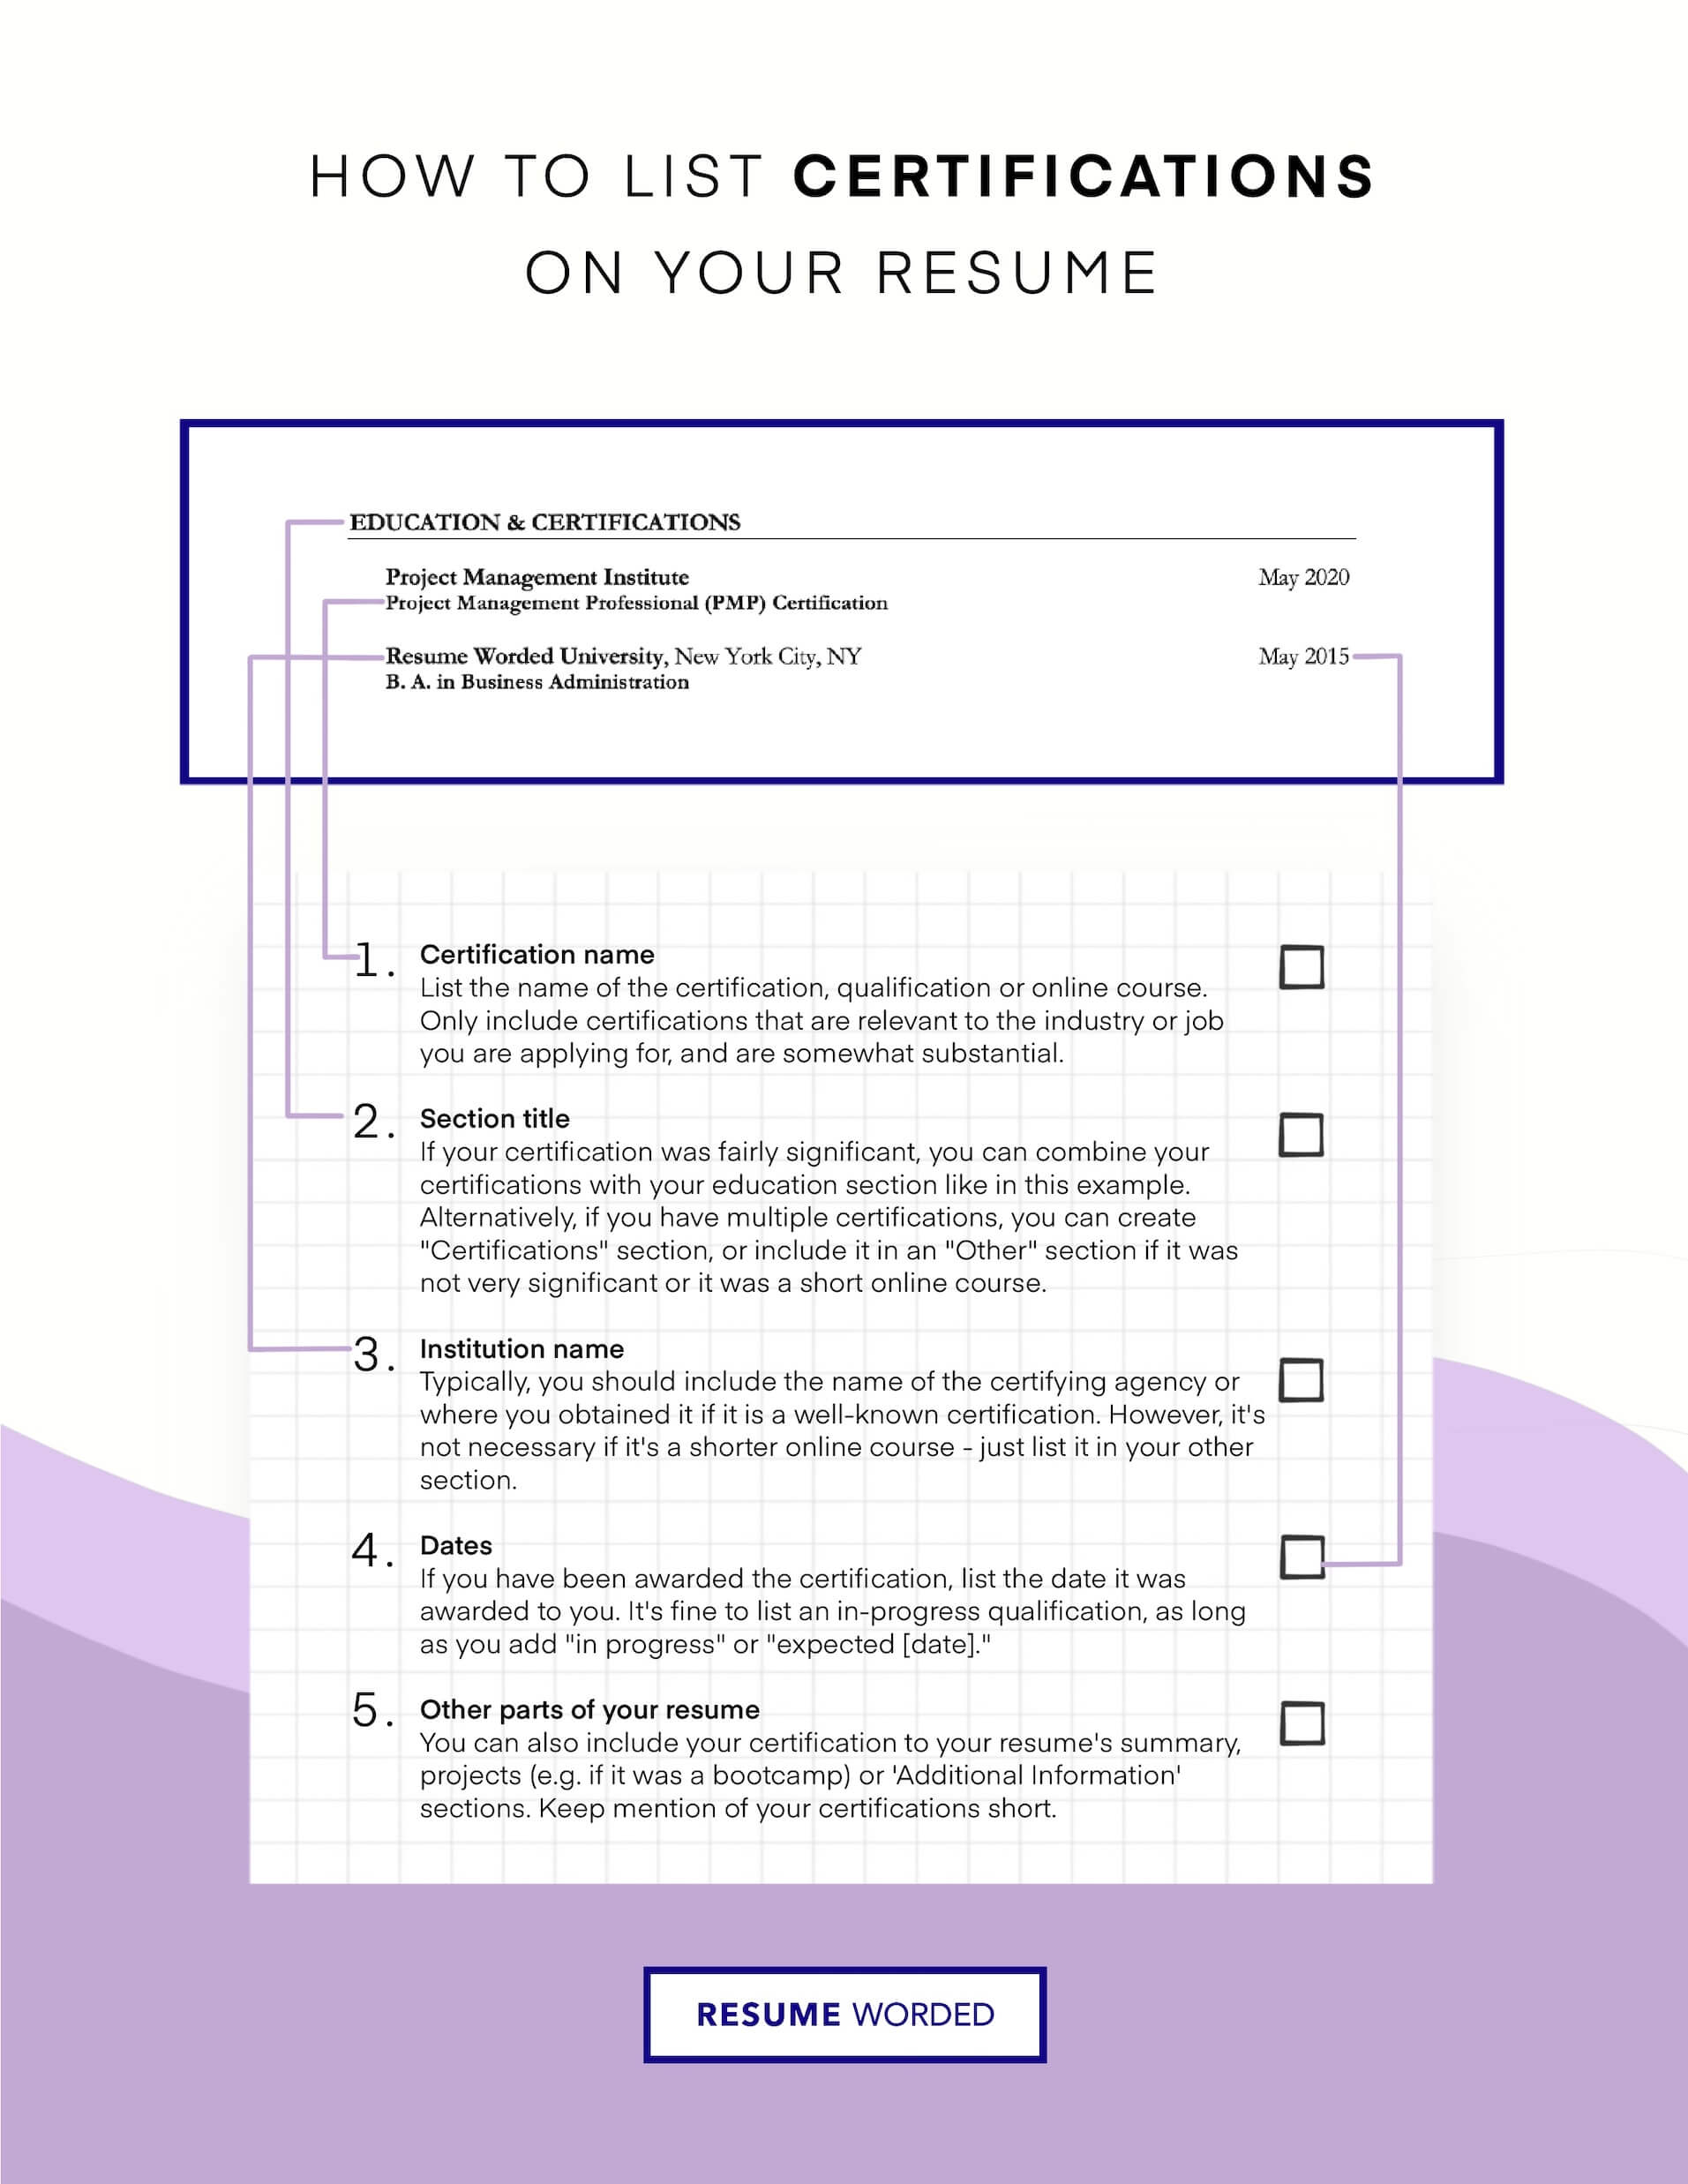 List skills and certifications separately - NICU Nurse Resume